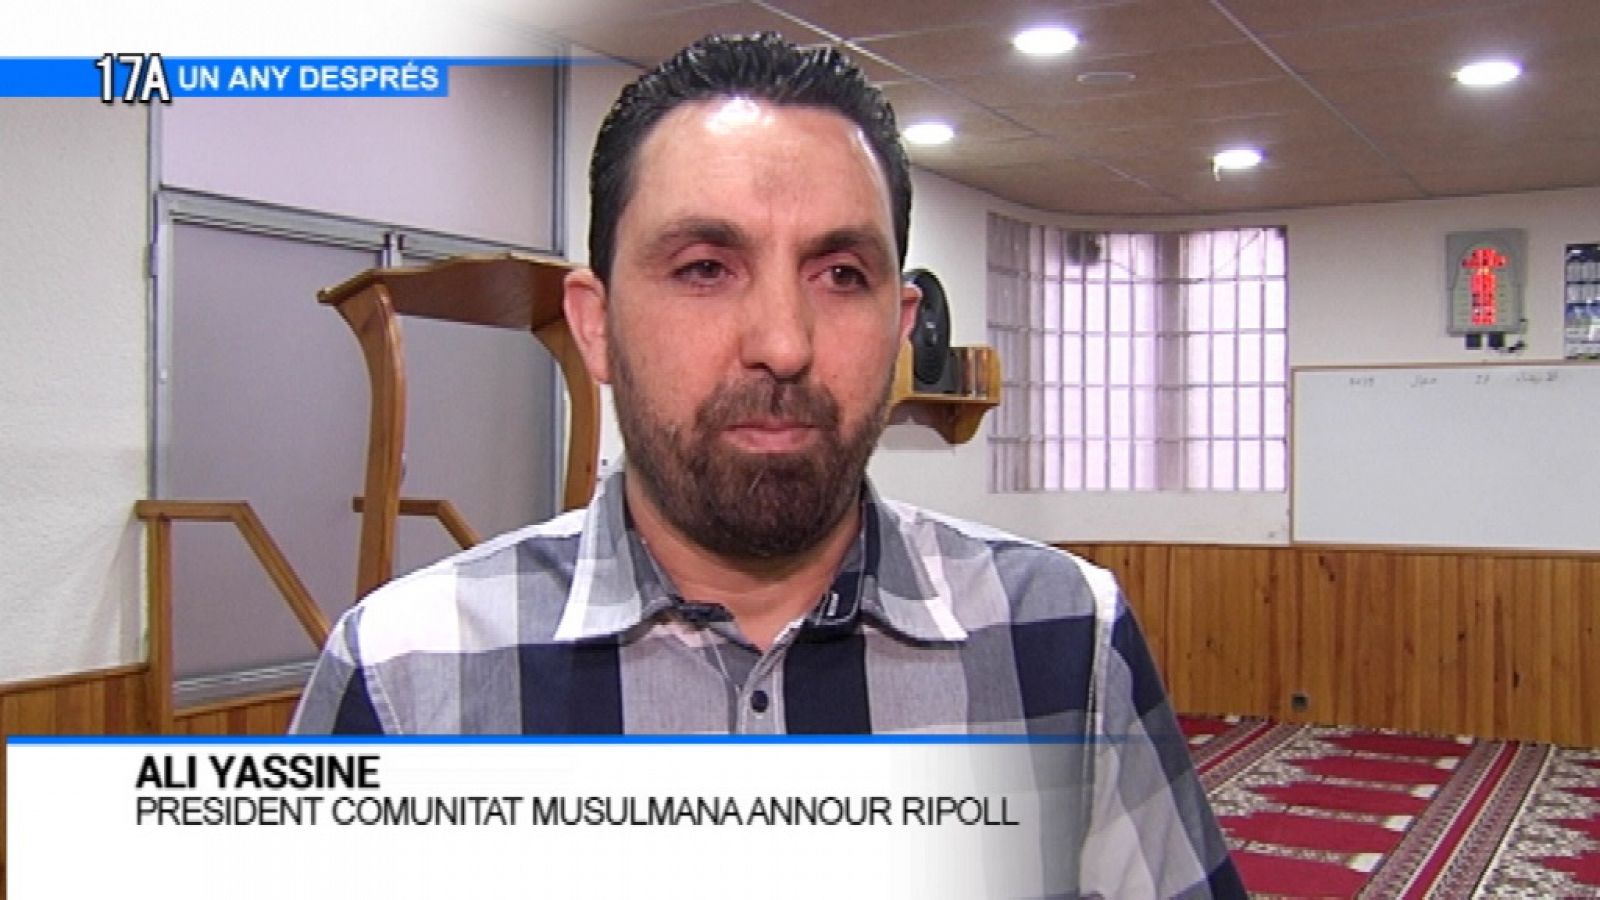 L'Informatiu: Ali Yassine, president comunitat musulmana Annour Ripoll | RTVE Play